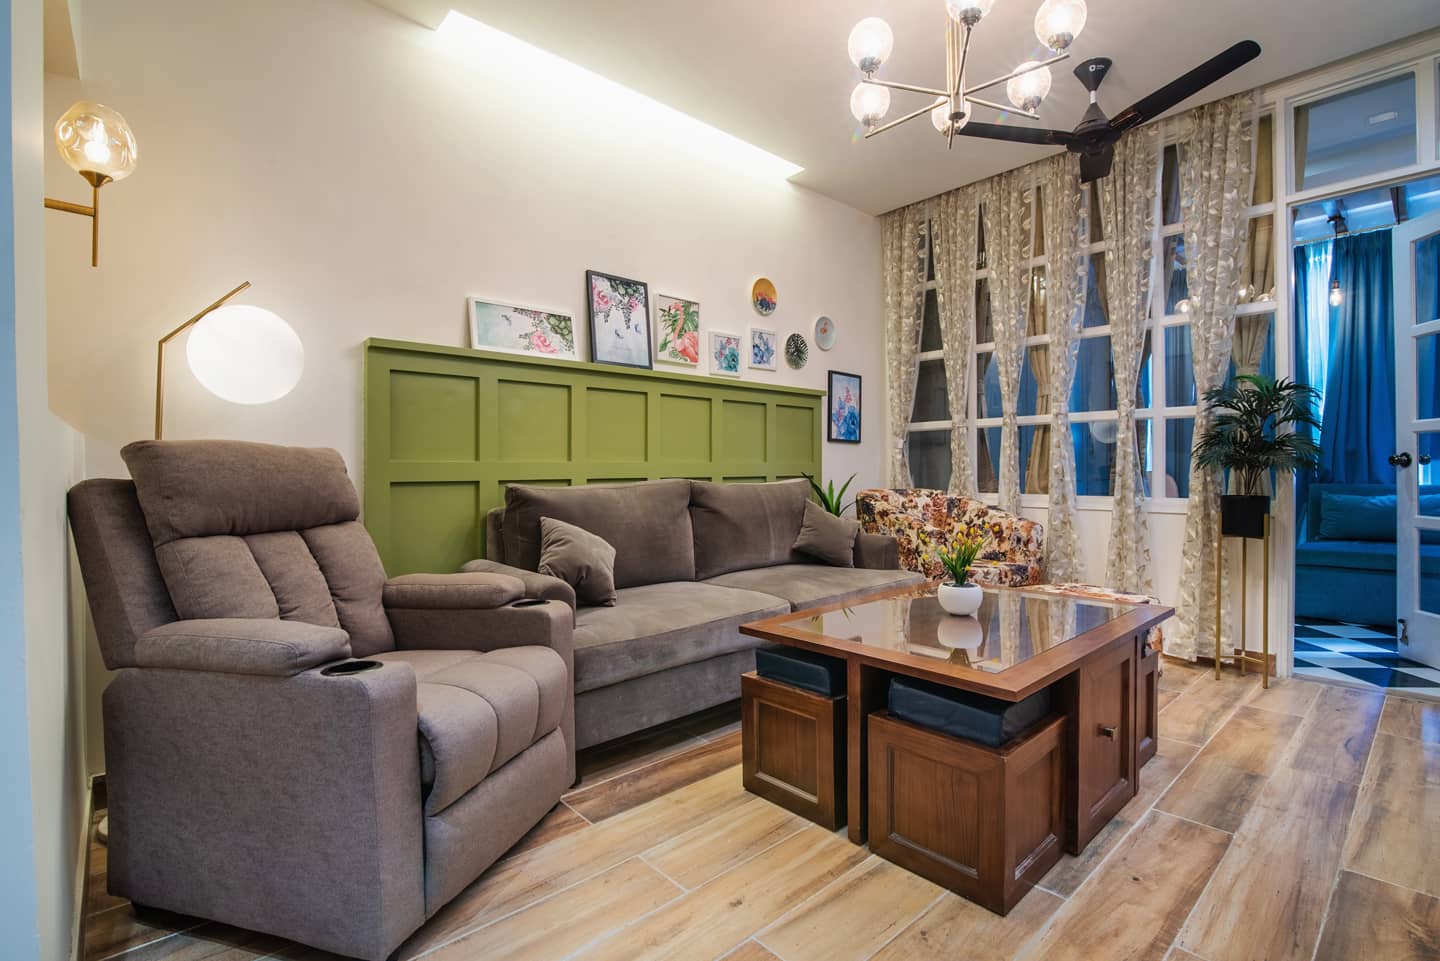 Simple Living Room Design